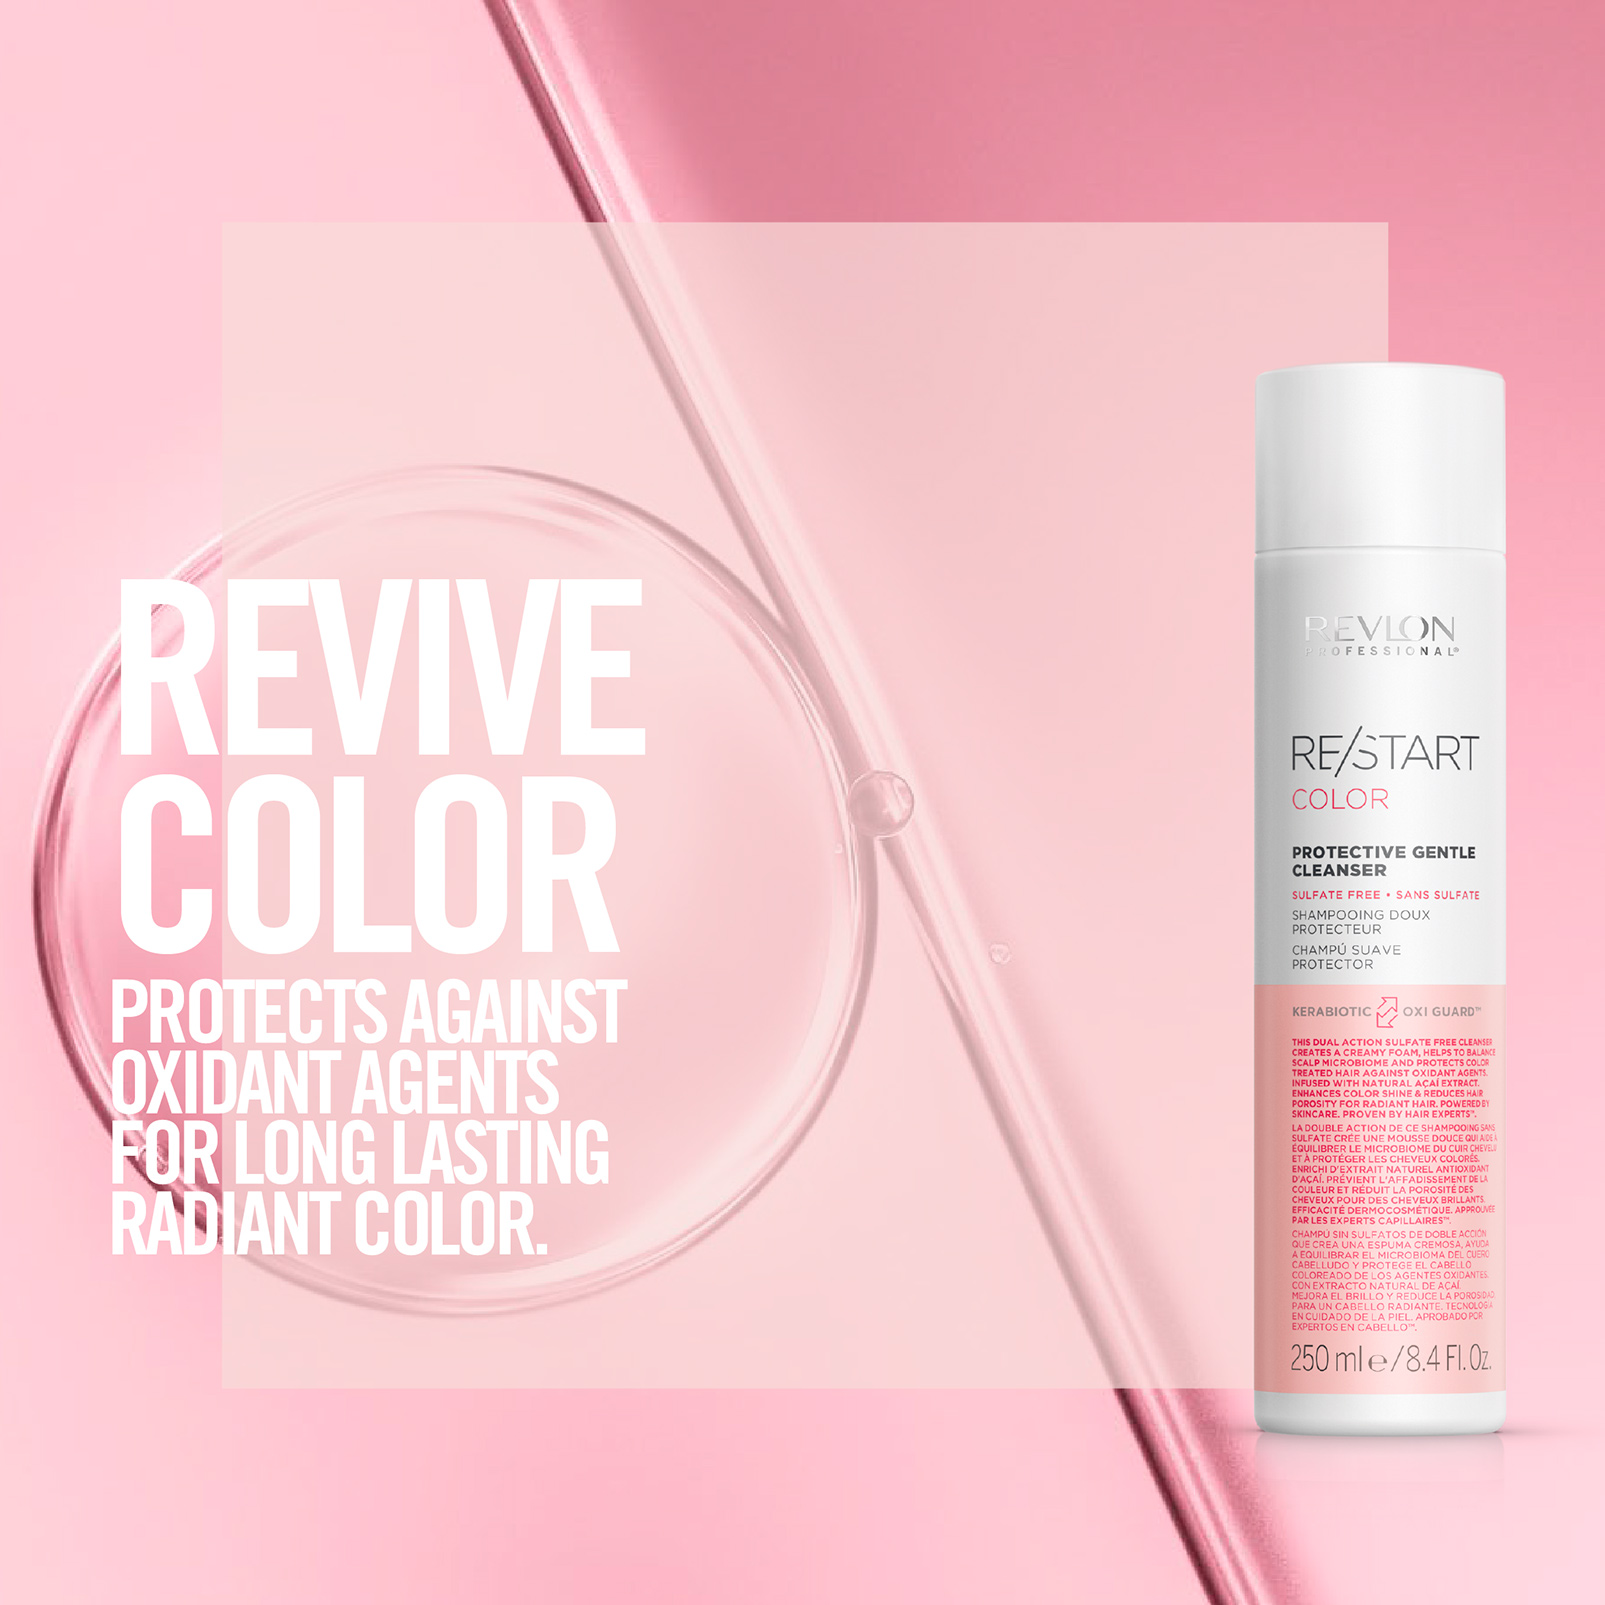 RE/START™ Revlon Cleanser Color - Professional Protective Gentle